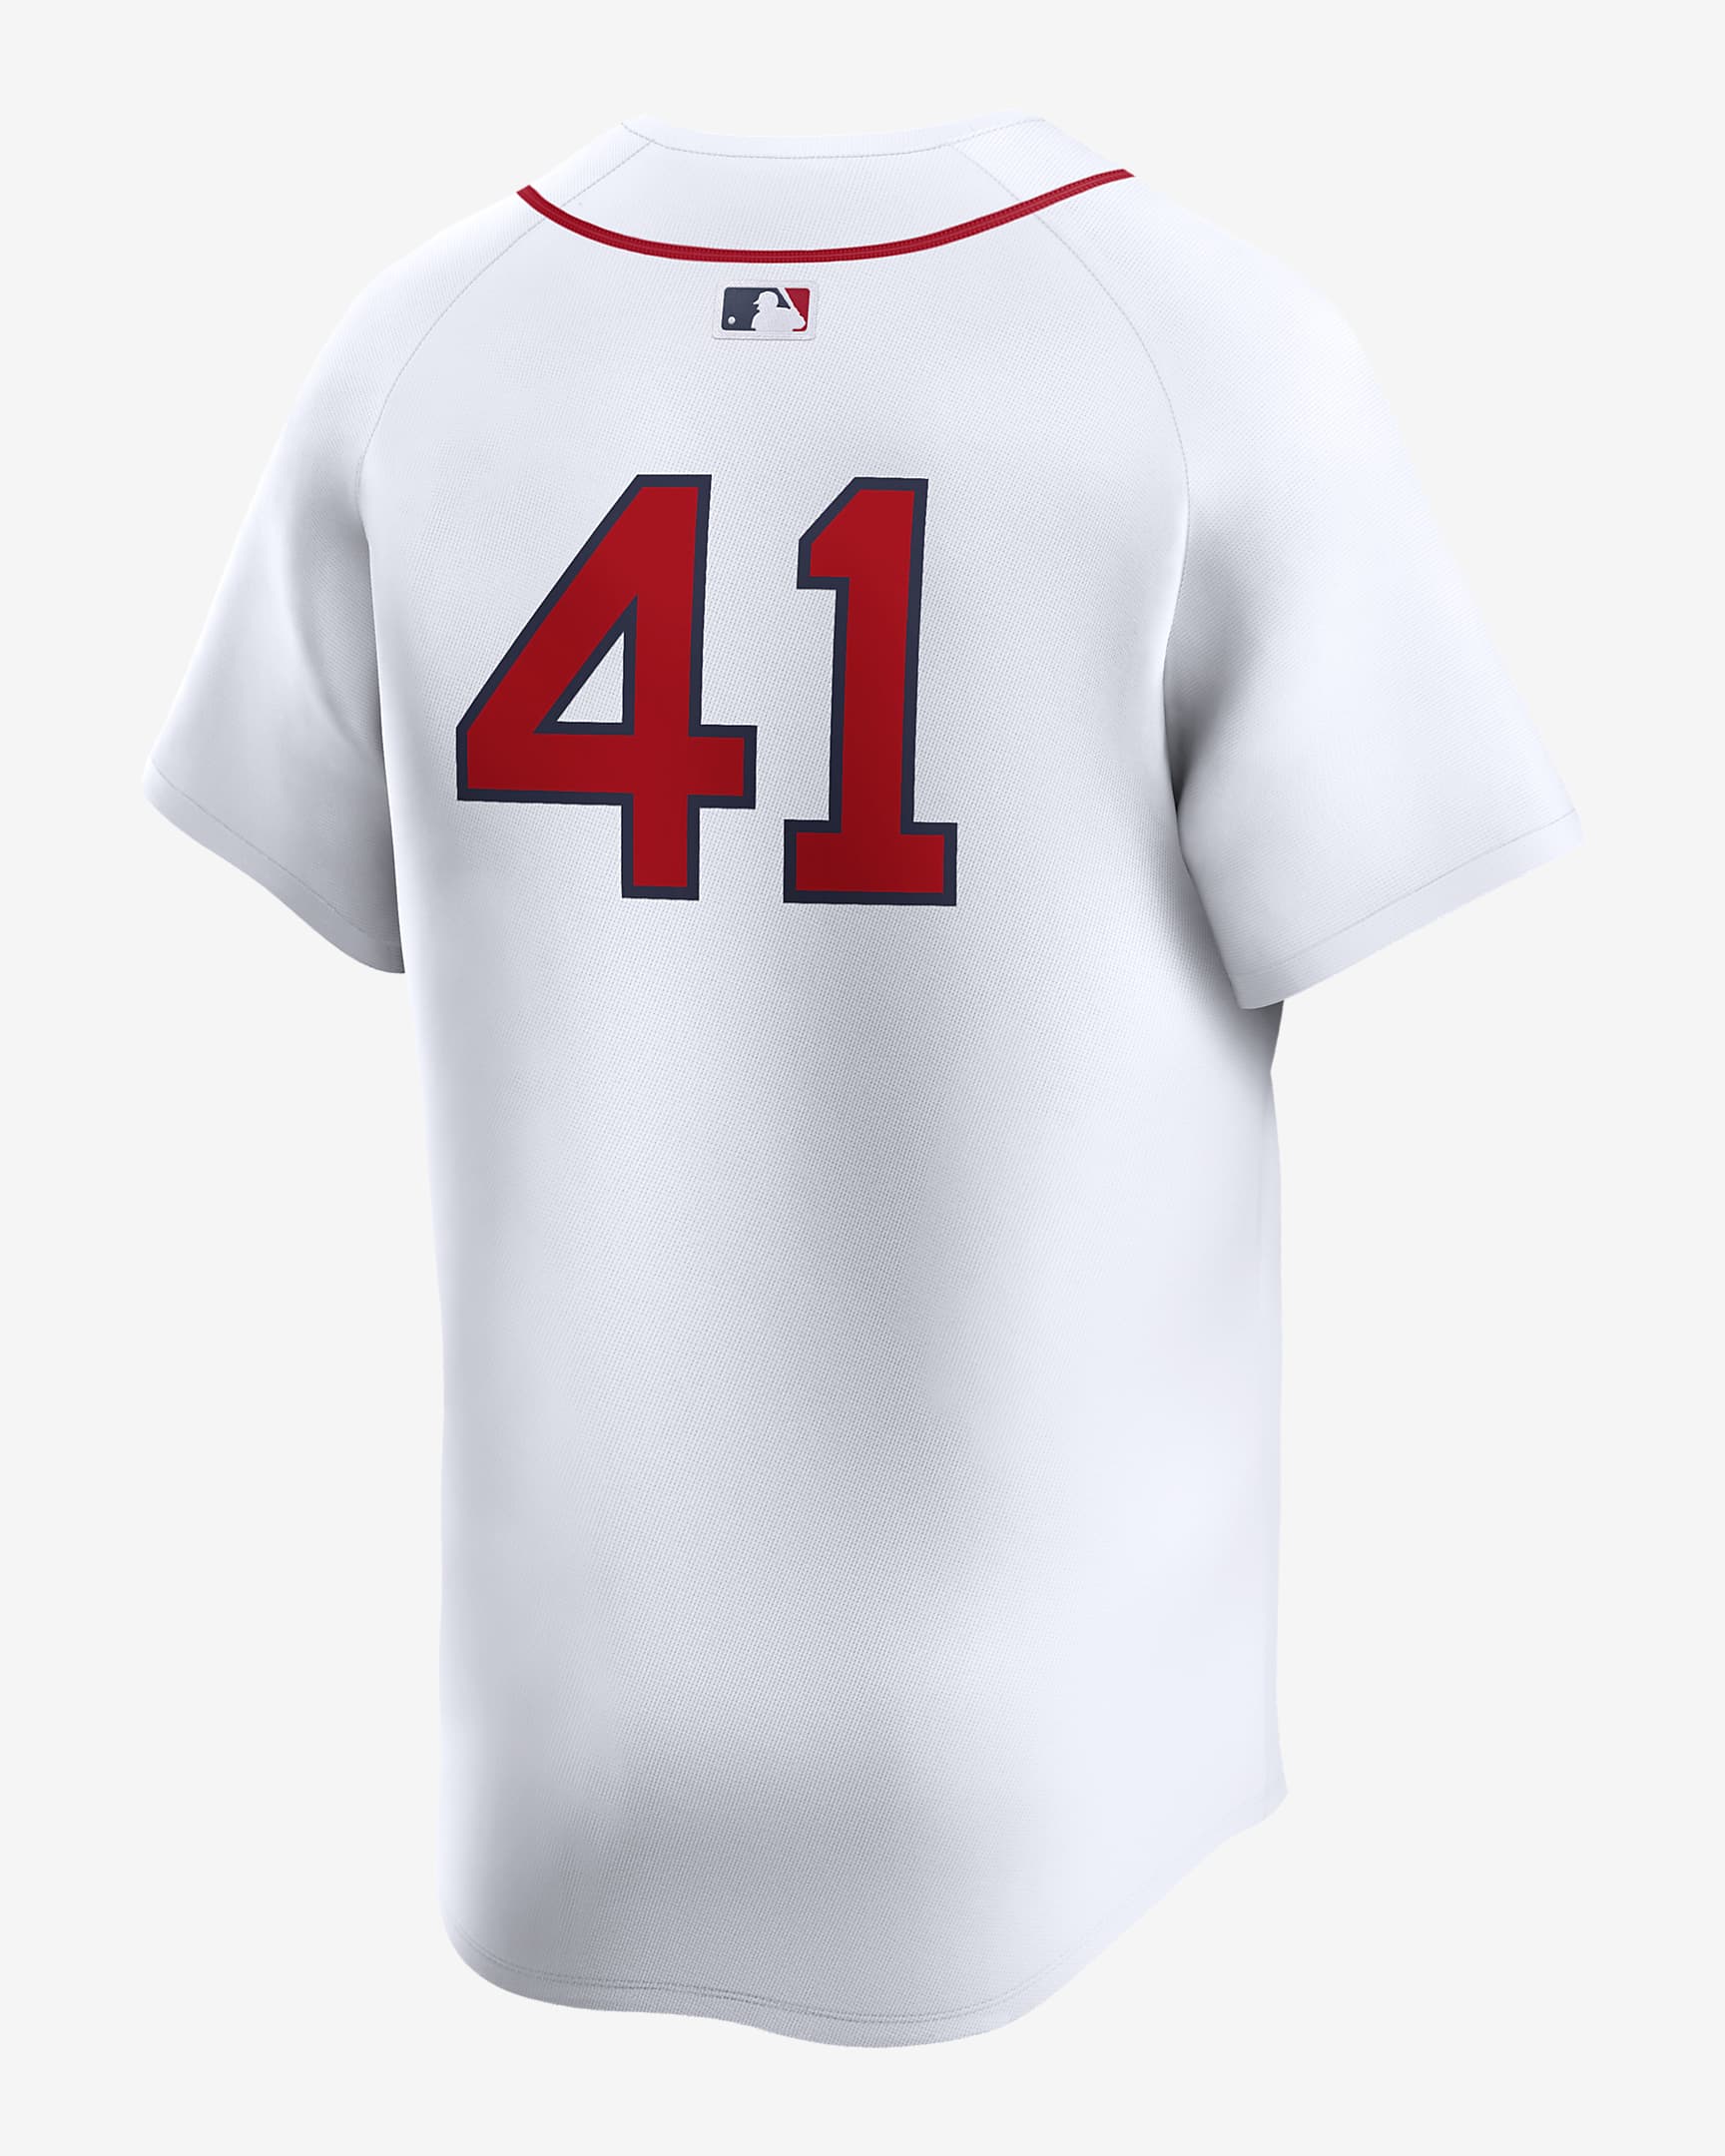 Jersey Nike Dri-FIT ADV de la MLB Limited para hombre Chris Sale Boston ...